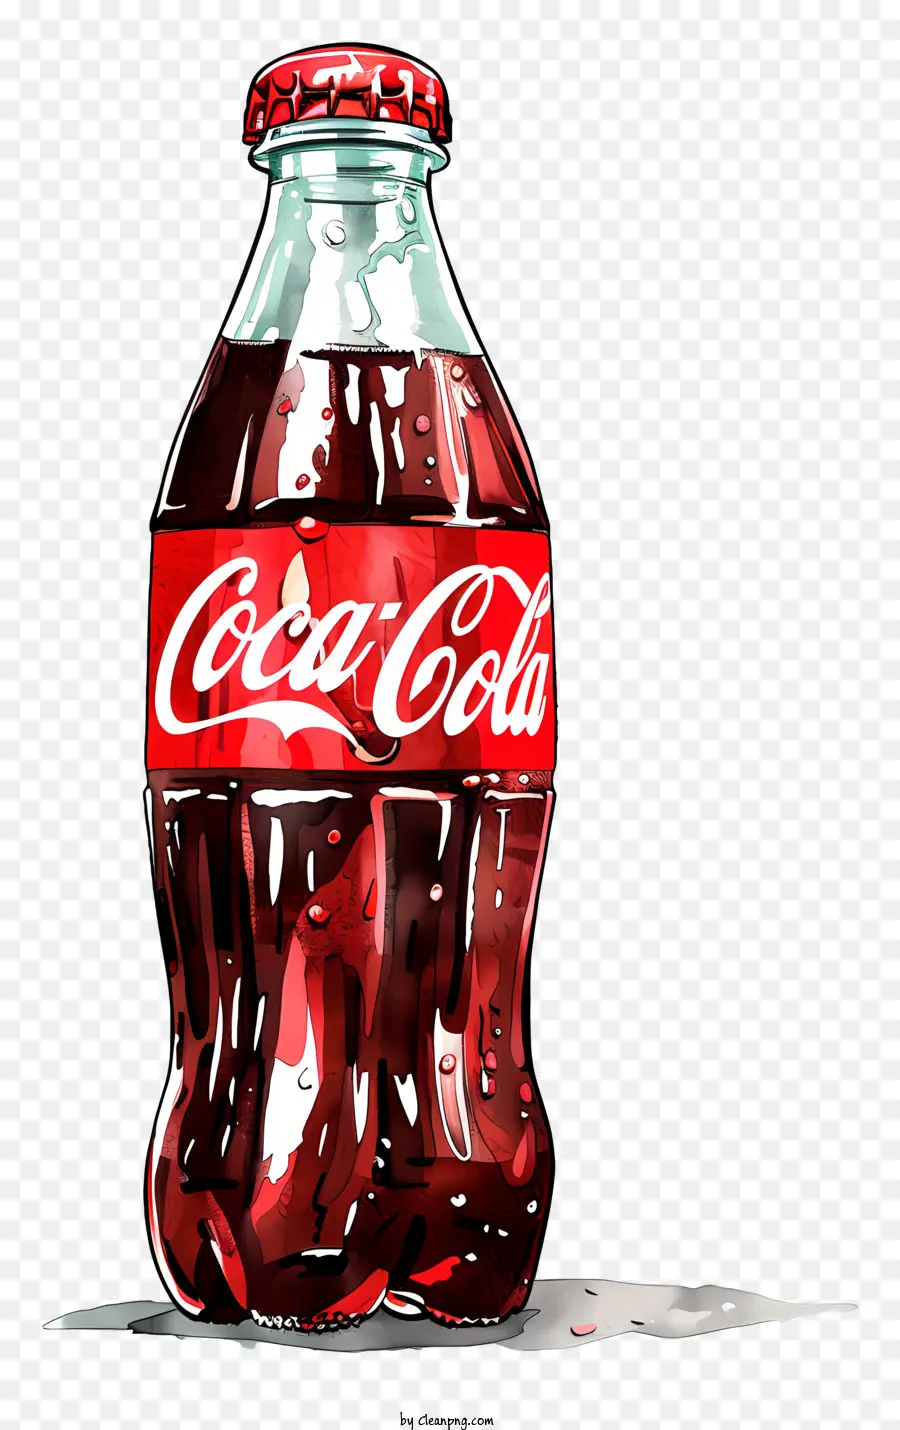 coca cola - Bức tranh chai coca cola trên nền đen